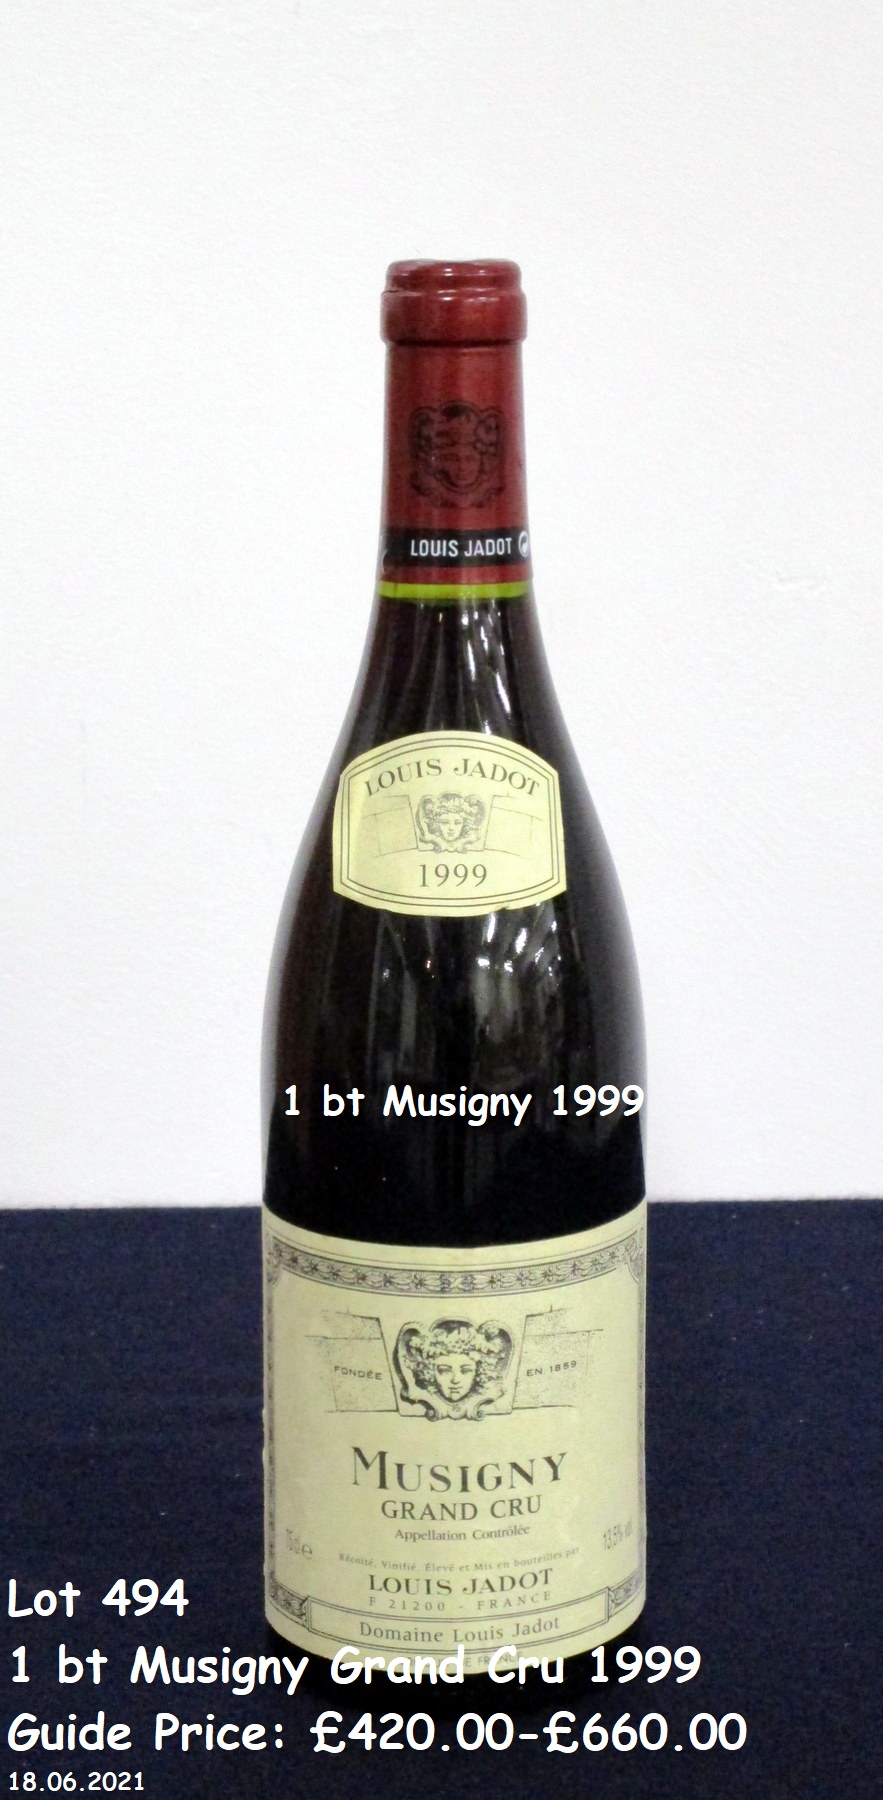 1 bt Musigny Grand Cru 1999 Louis Jadot i.n